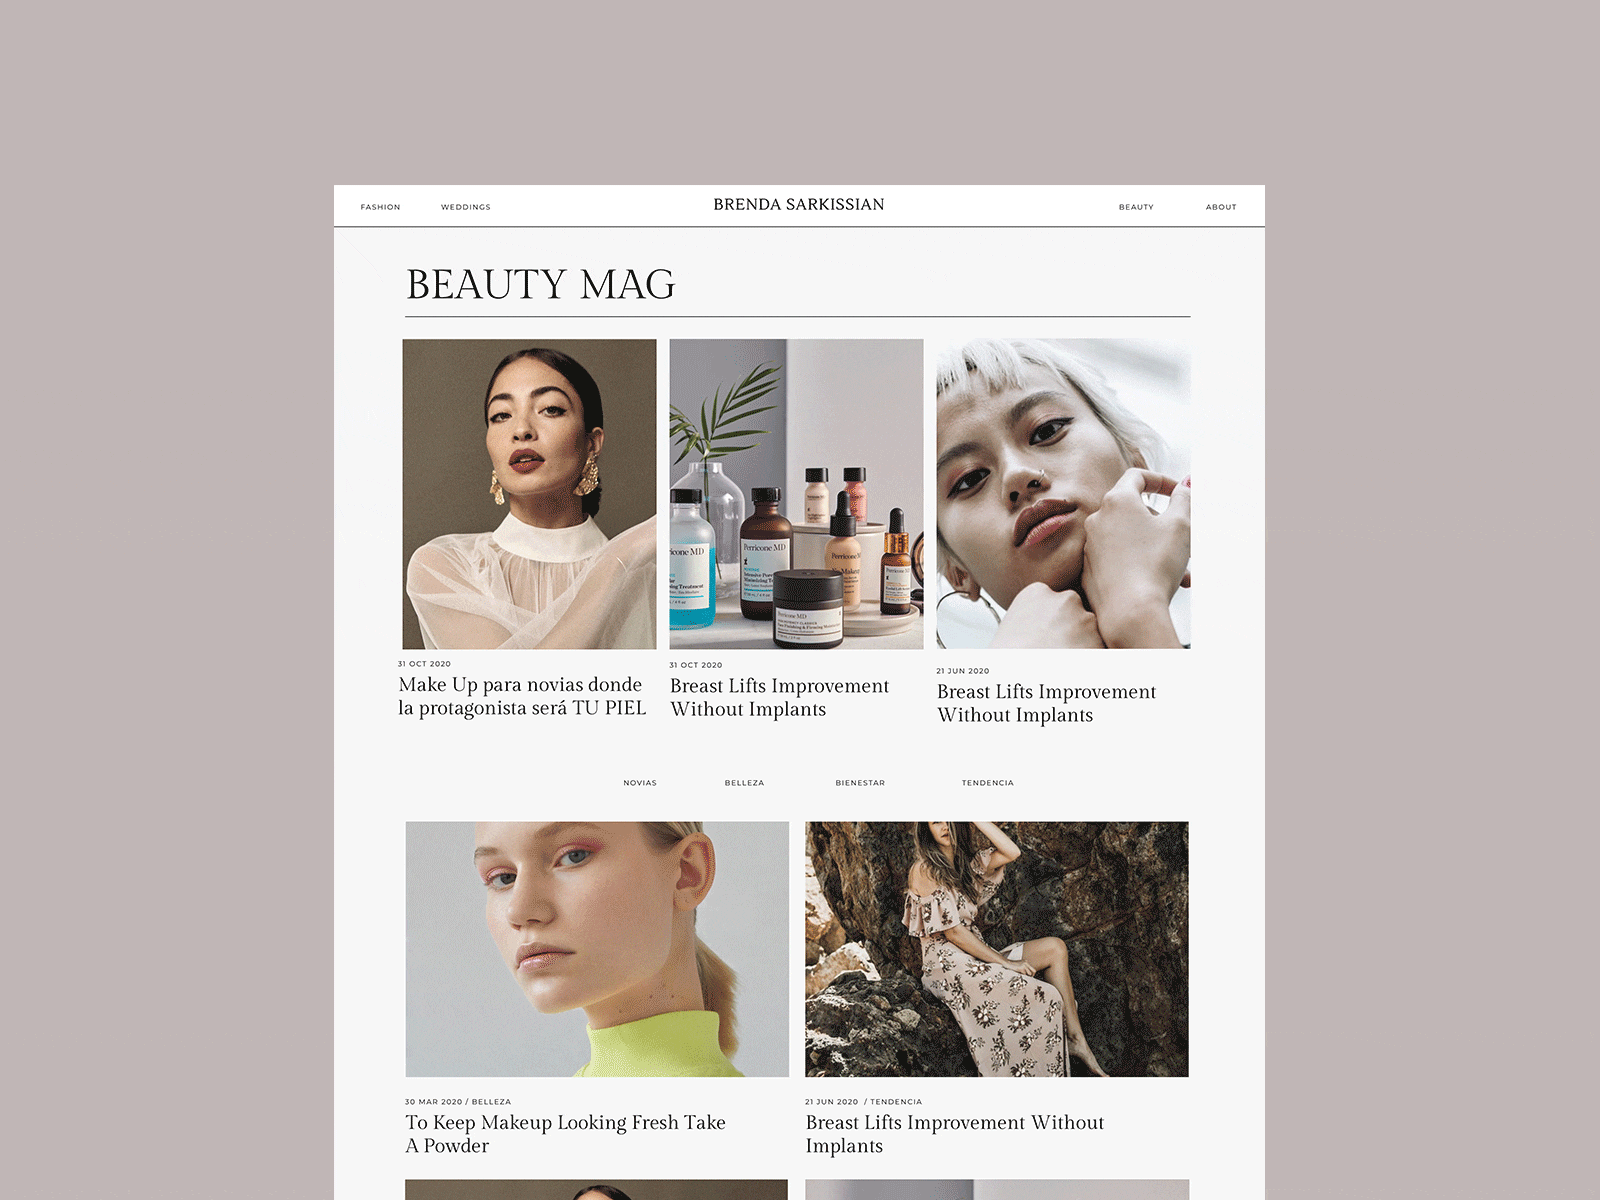 Makeup Artis magazine fashion magazine makeup artist photograph portfolio website